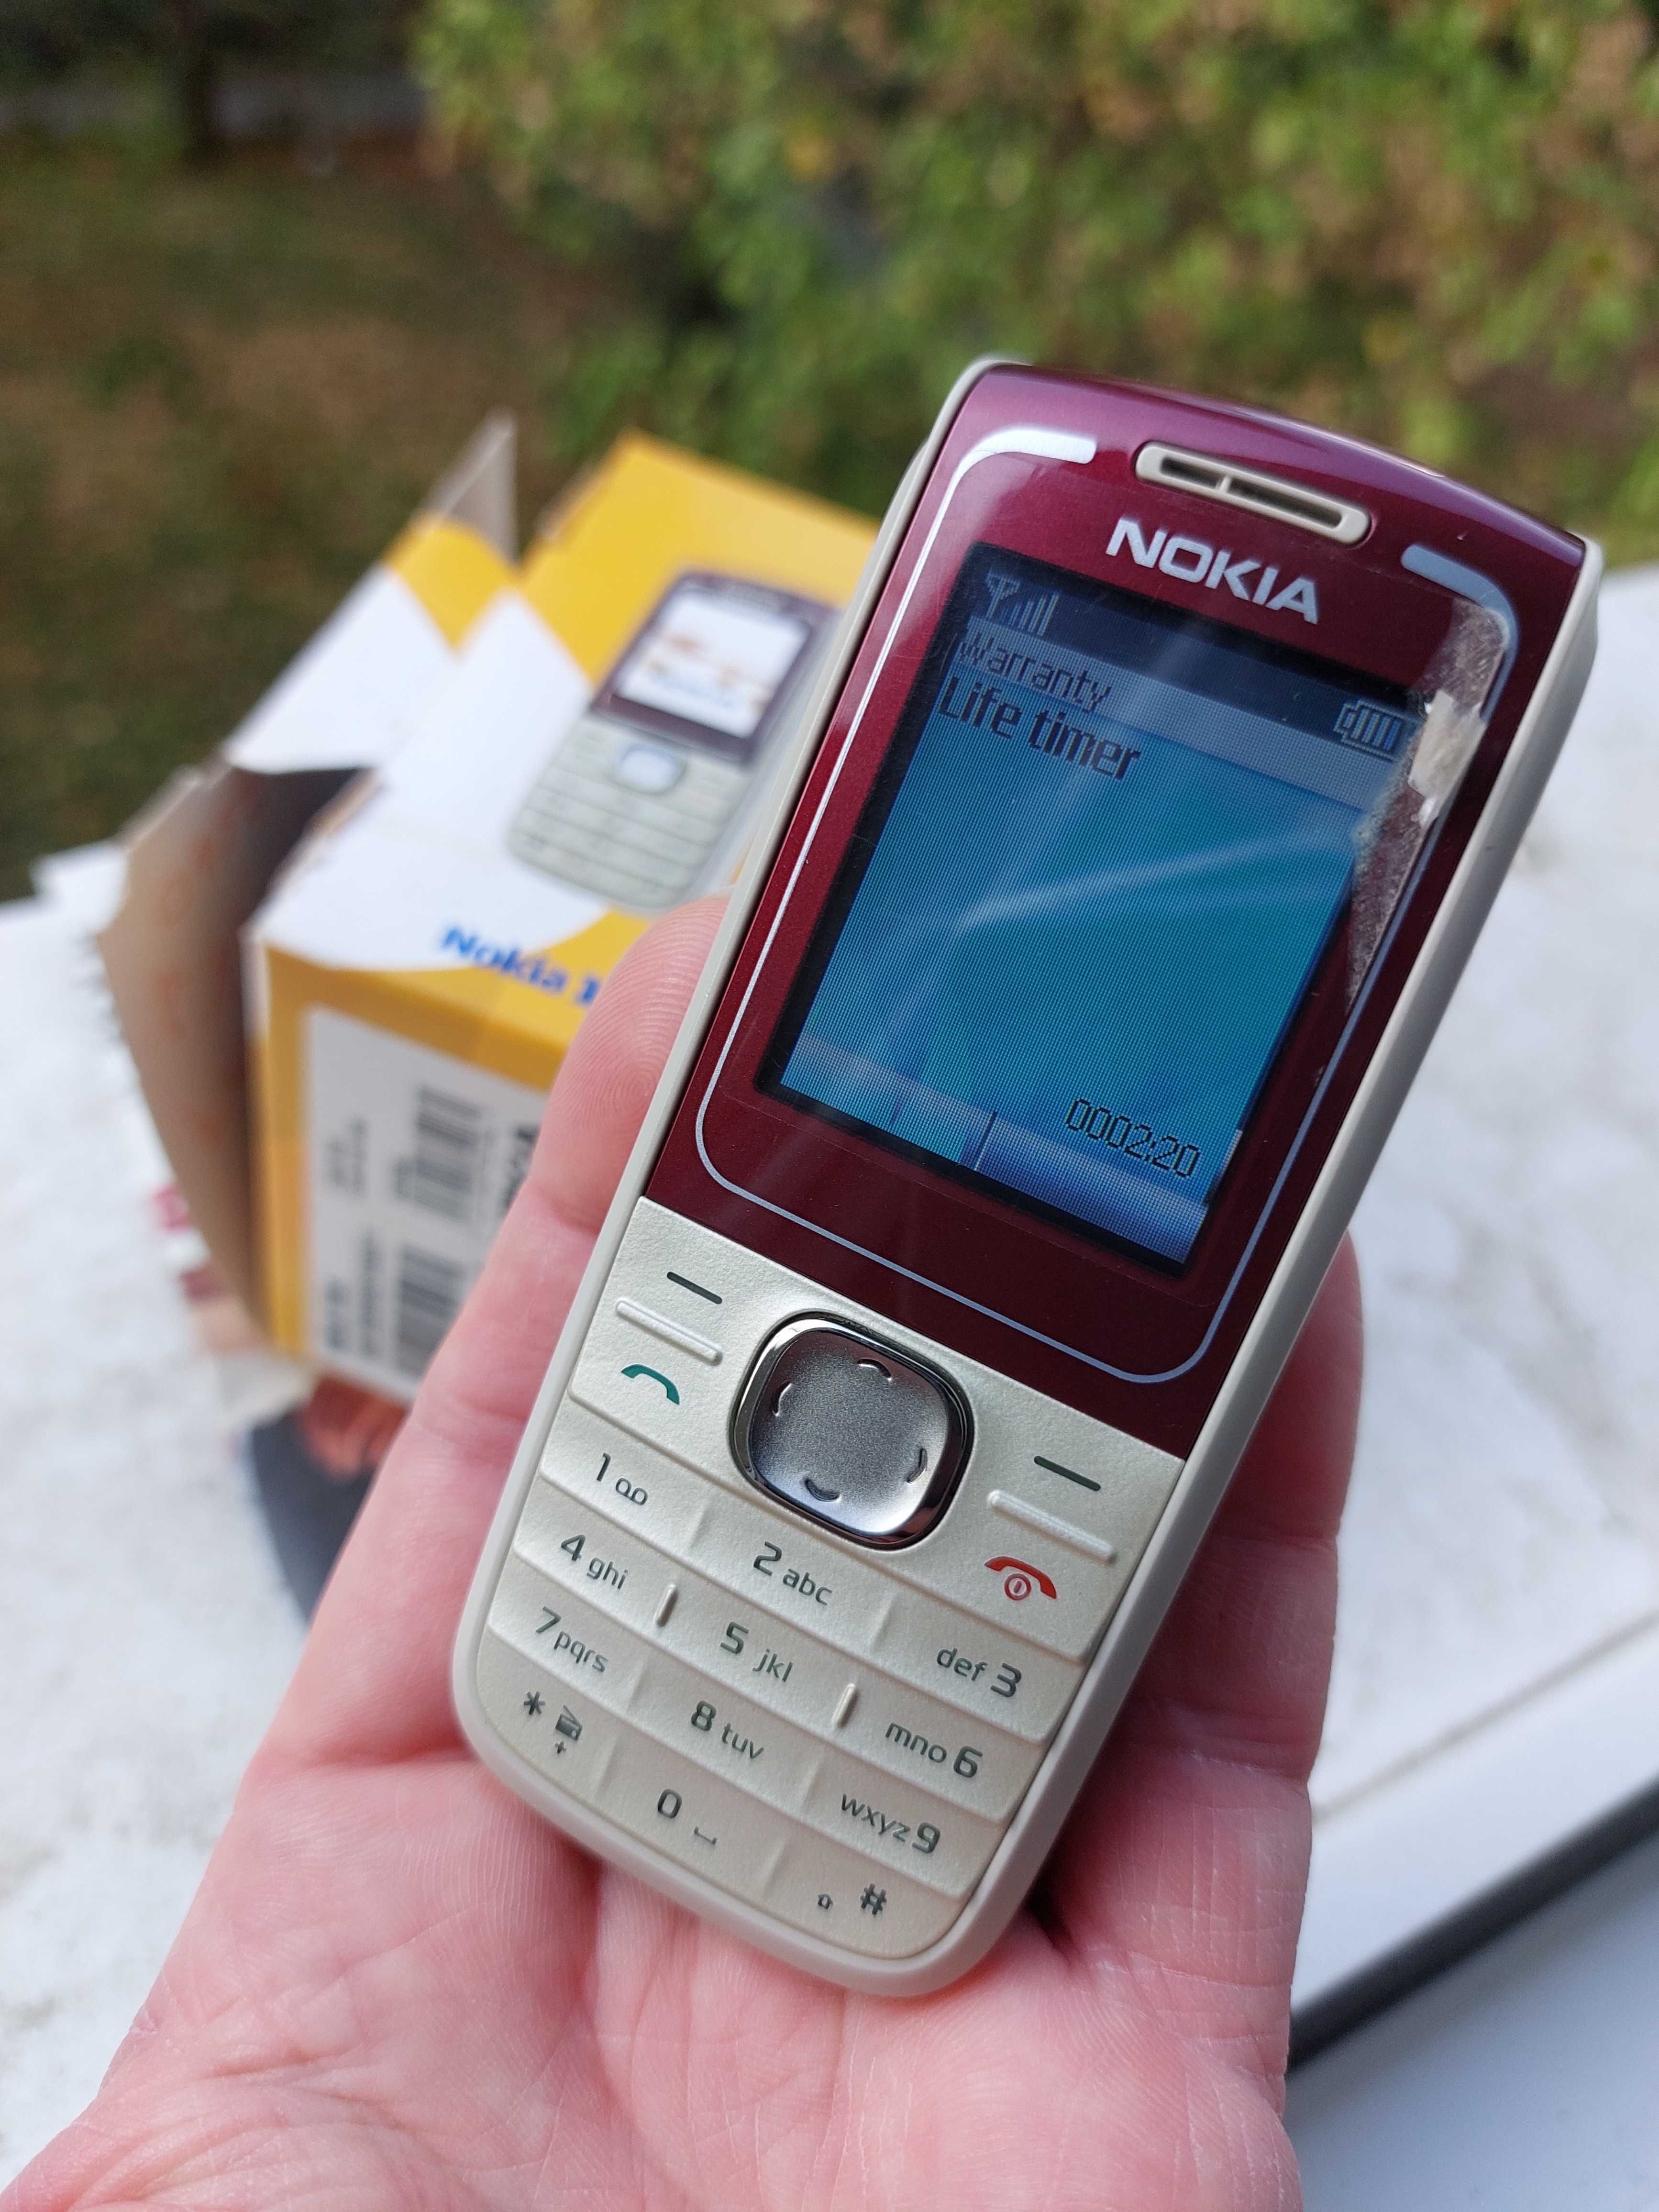 Nokia 1650 orig NOU lifetimer 00:02 nefolosit pastrat perf la cutie/ac